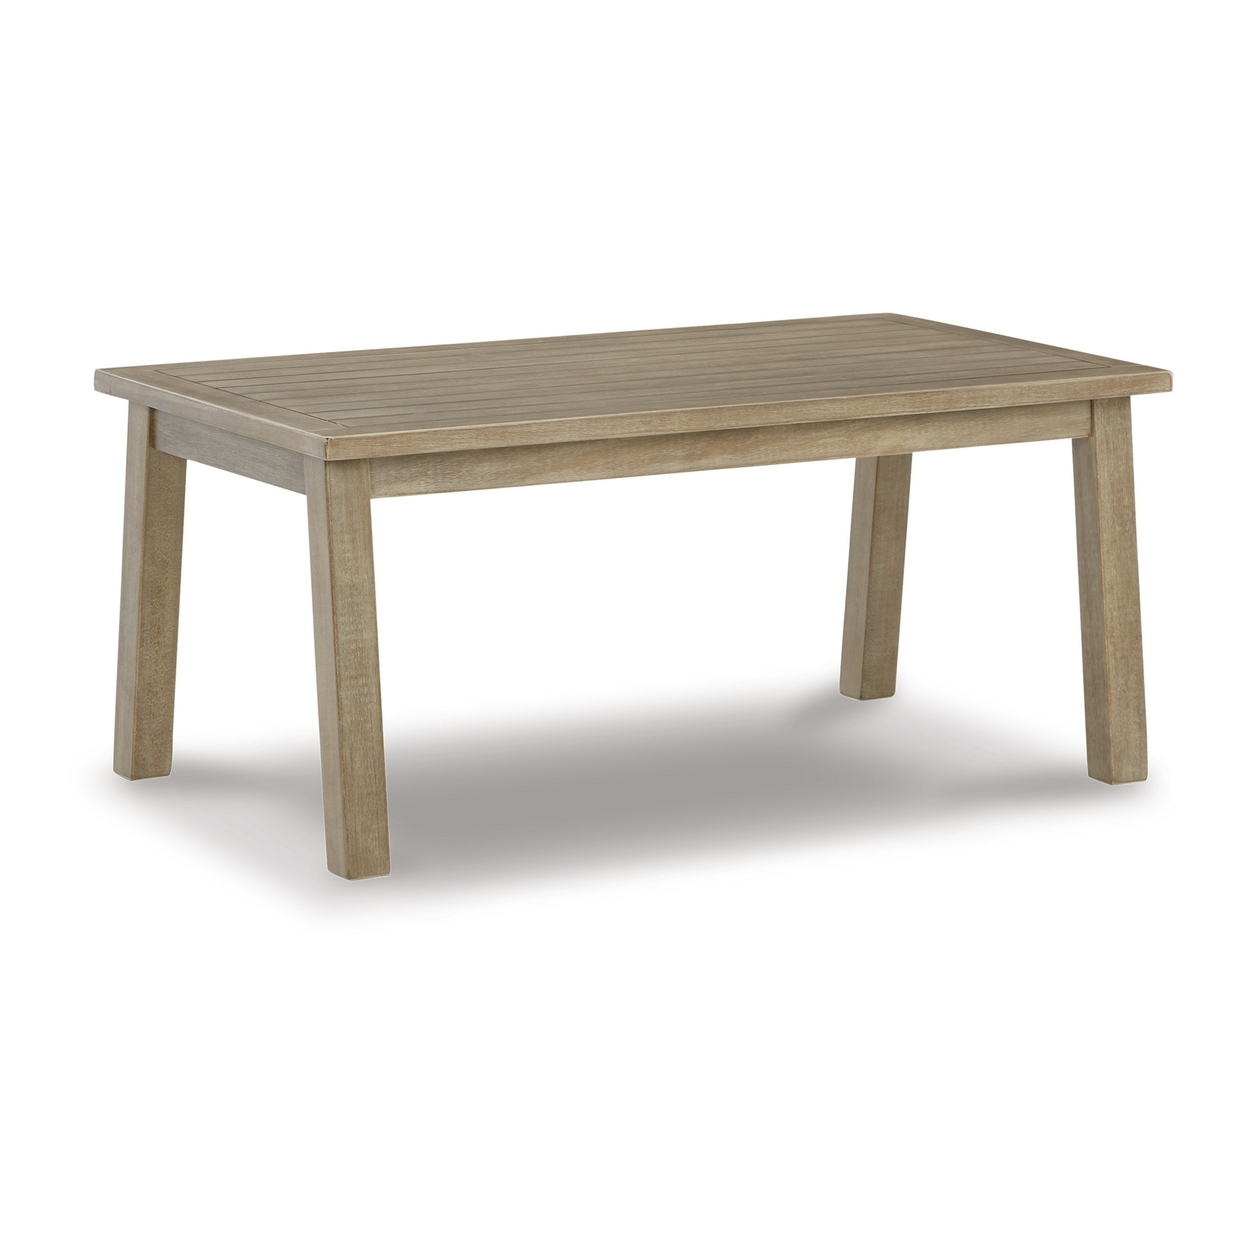 Bern 39 Inch Outdoor Coffee Table, Slatted Top, Brown Eucalyptus Wood - Saltoro Sherpi